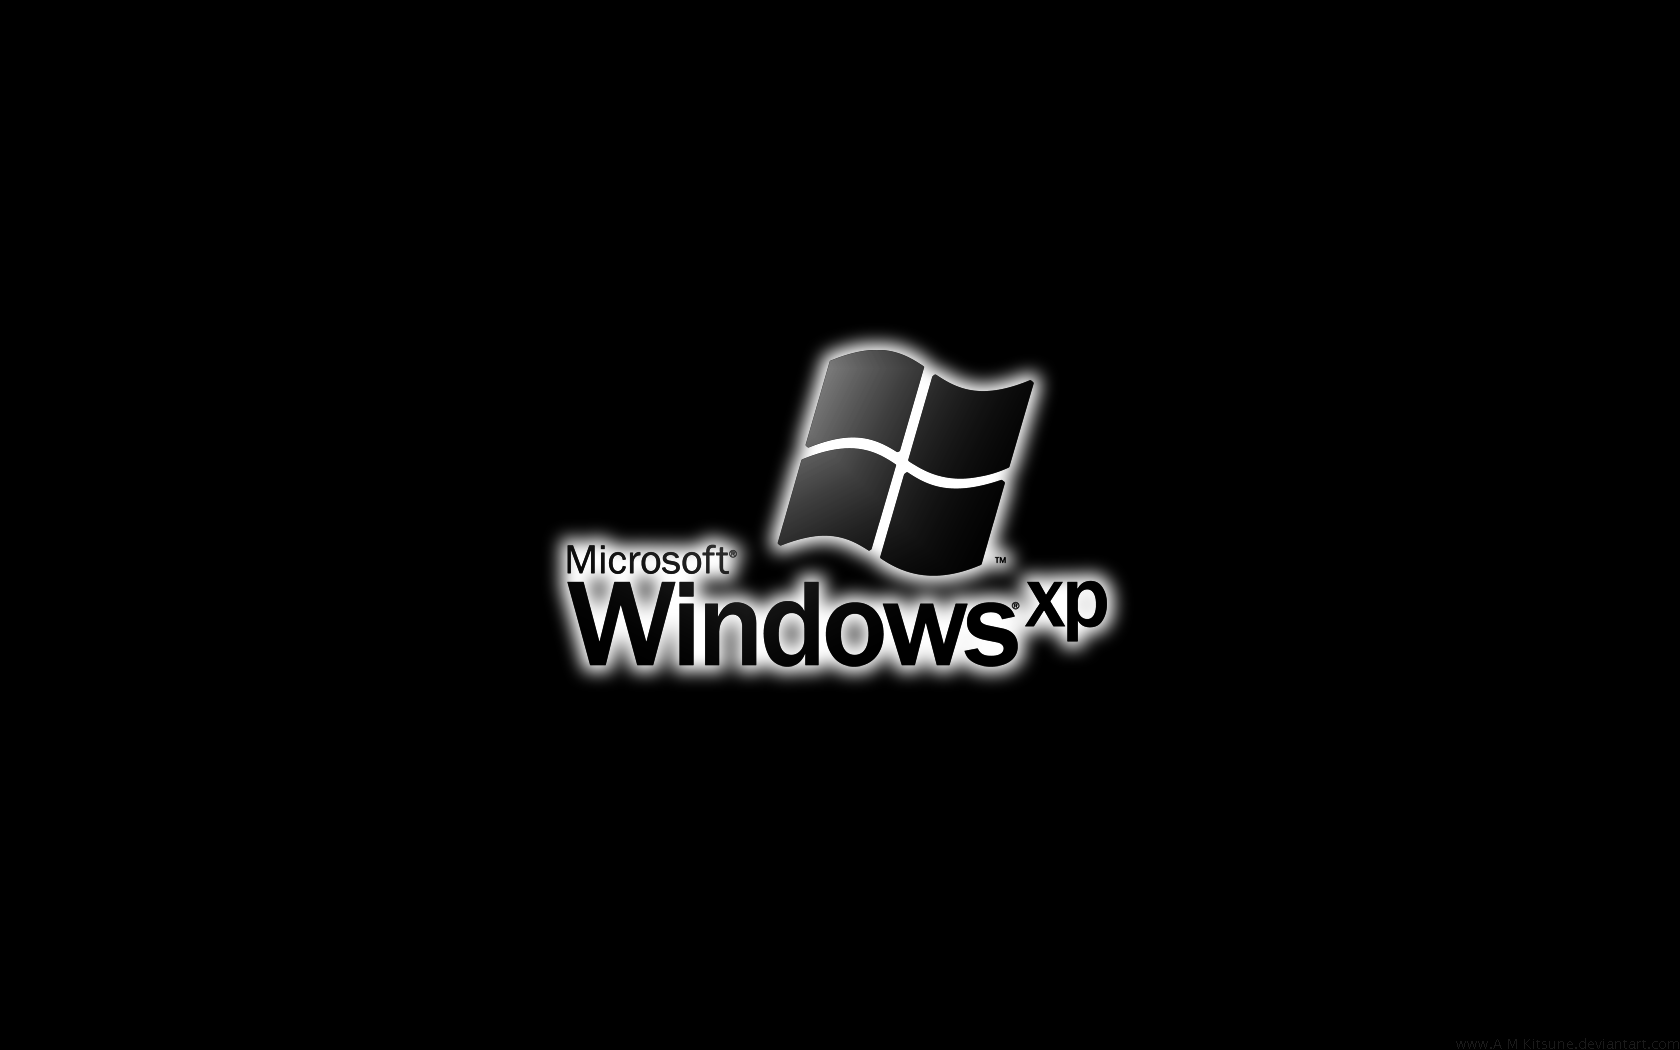 Microsoft Windows Xp Wallpapers - Wallpaper Cave